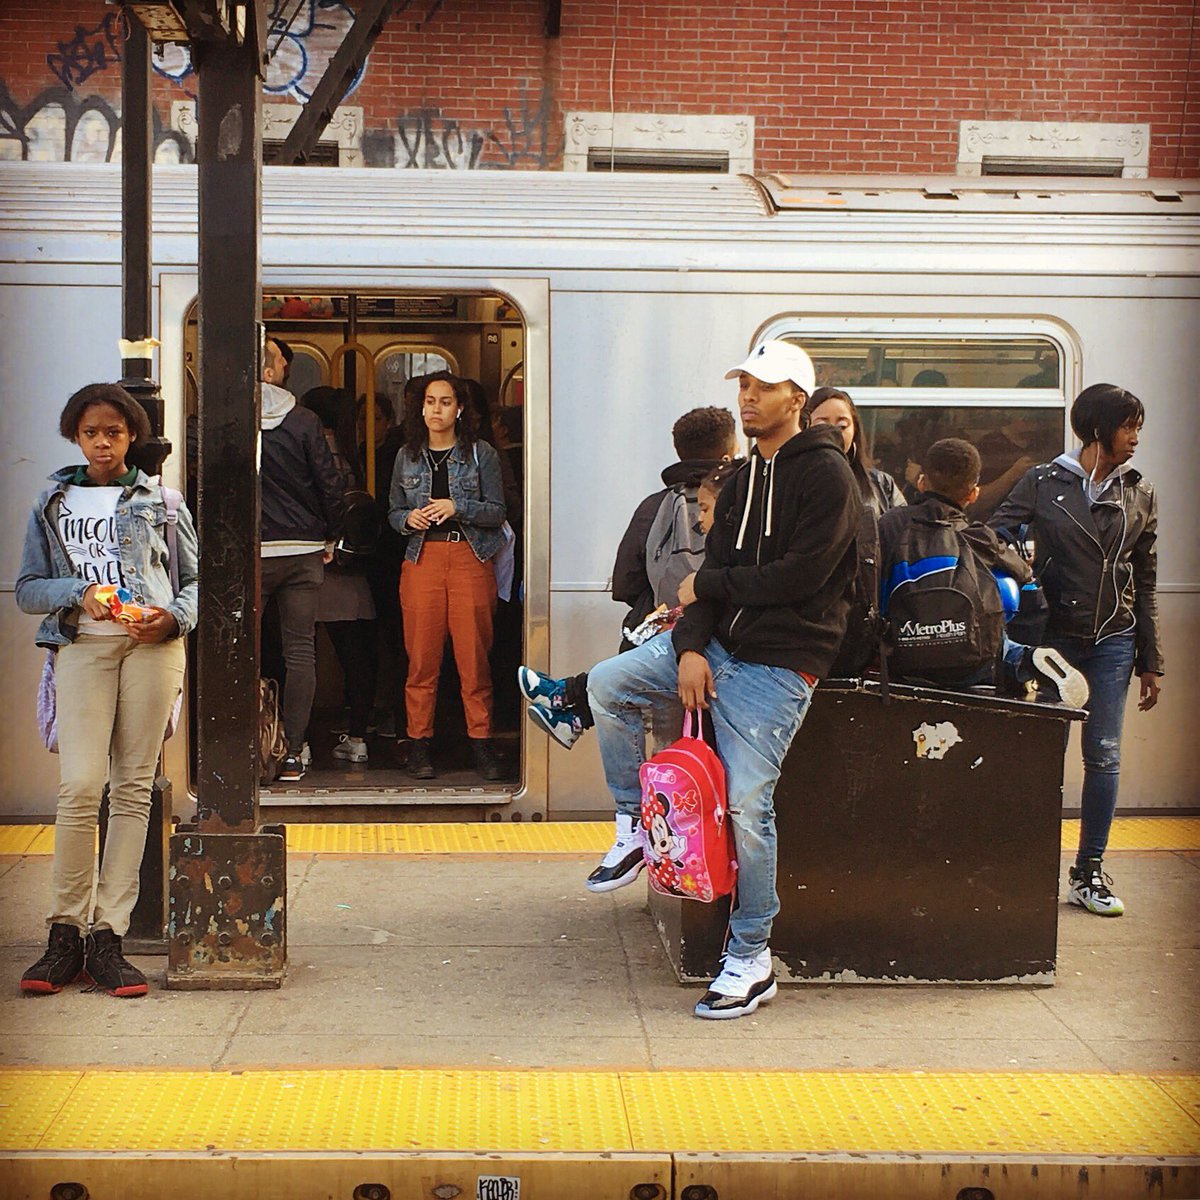 J train, Myrtle/Broadway Station